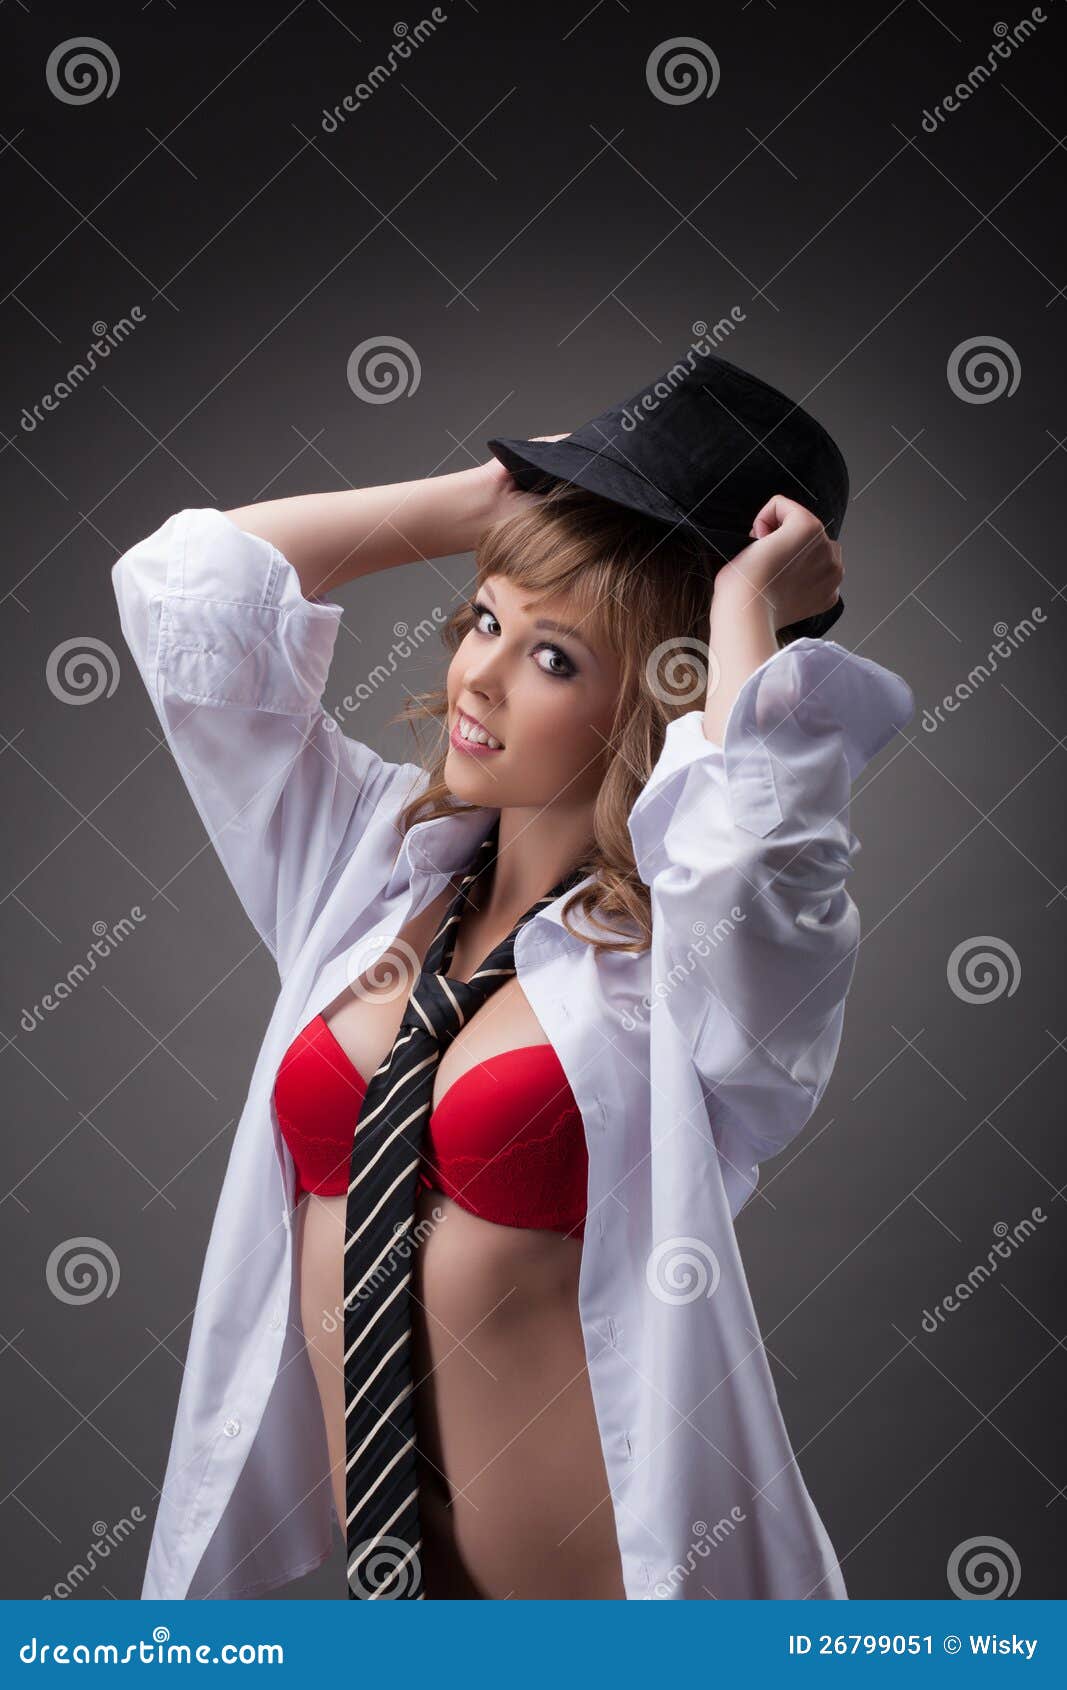 Beauty Girl Undress White Shirt in Striptease Stock Image - Image